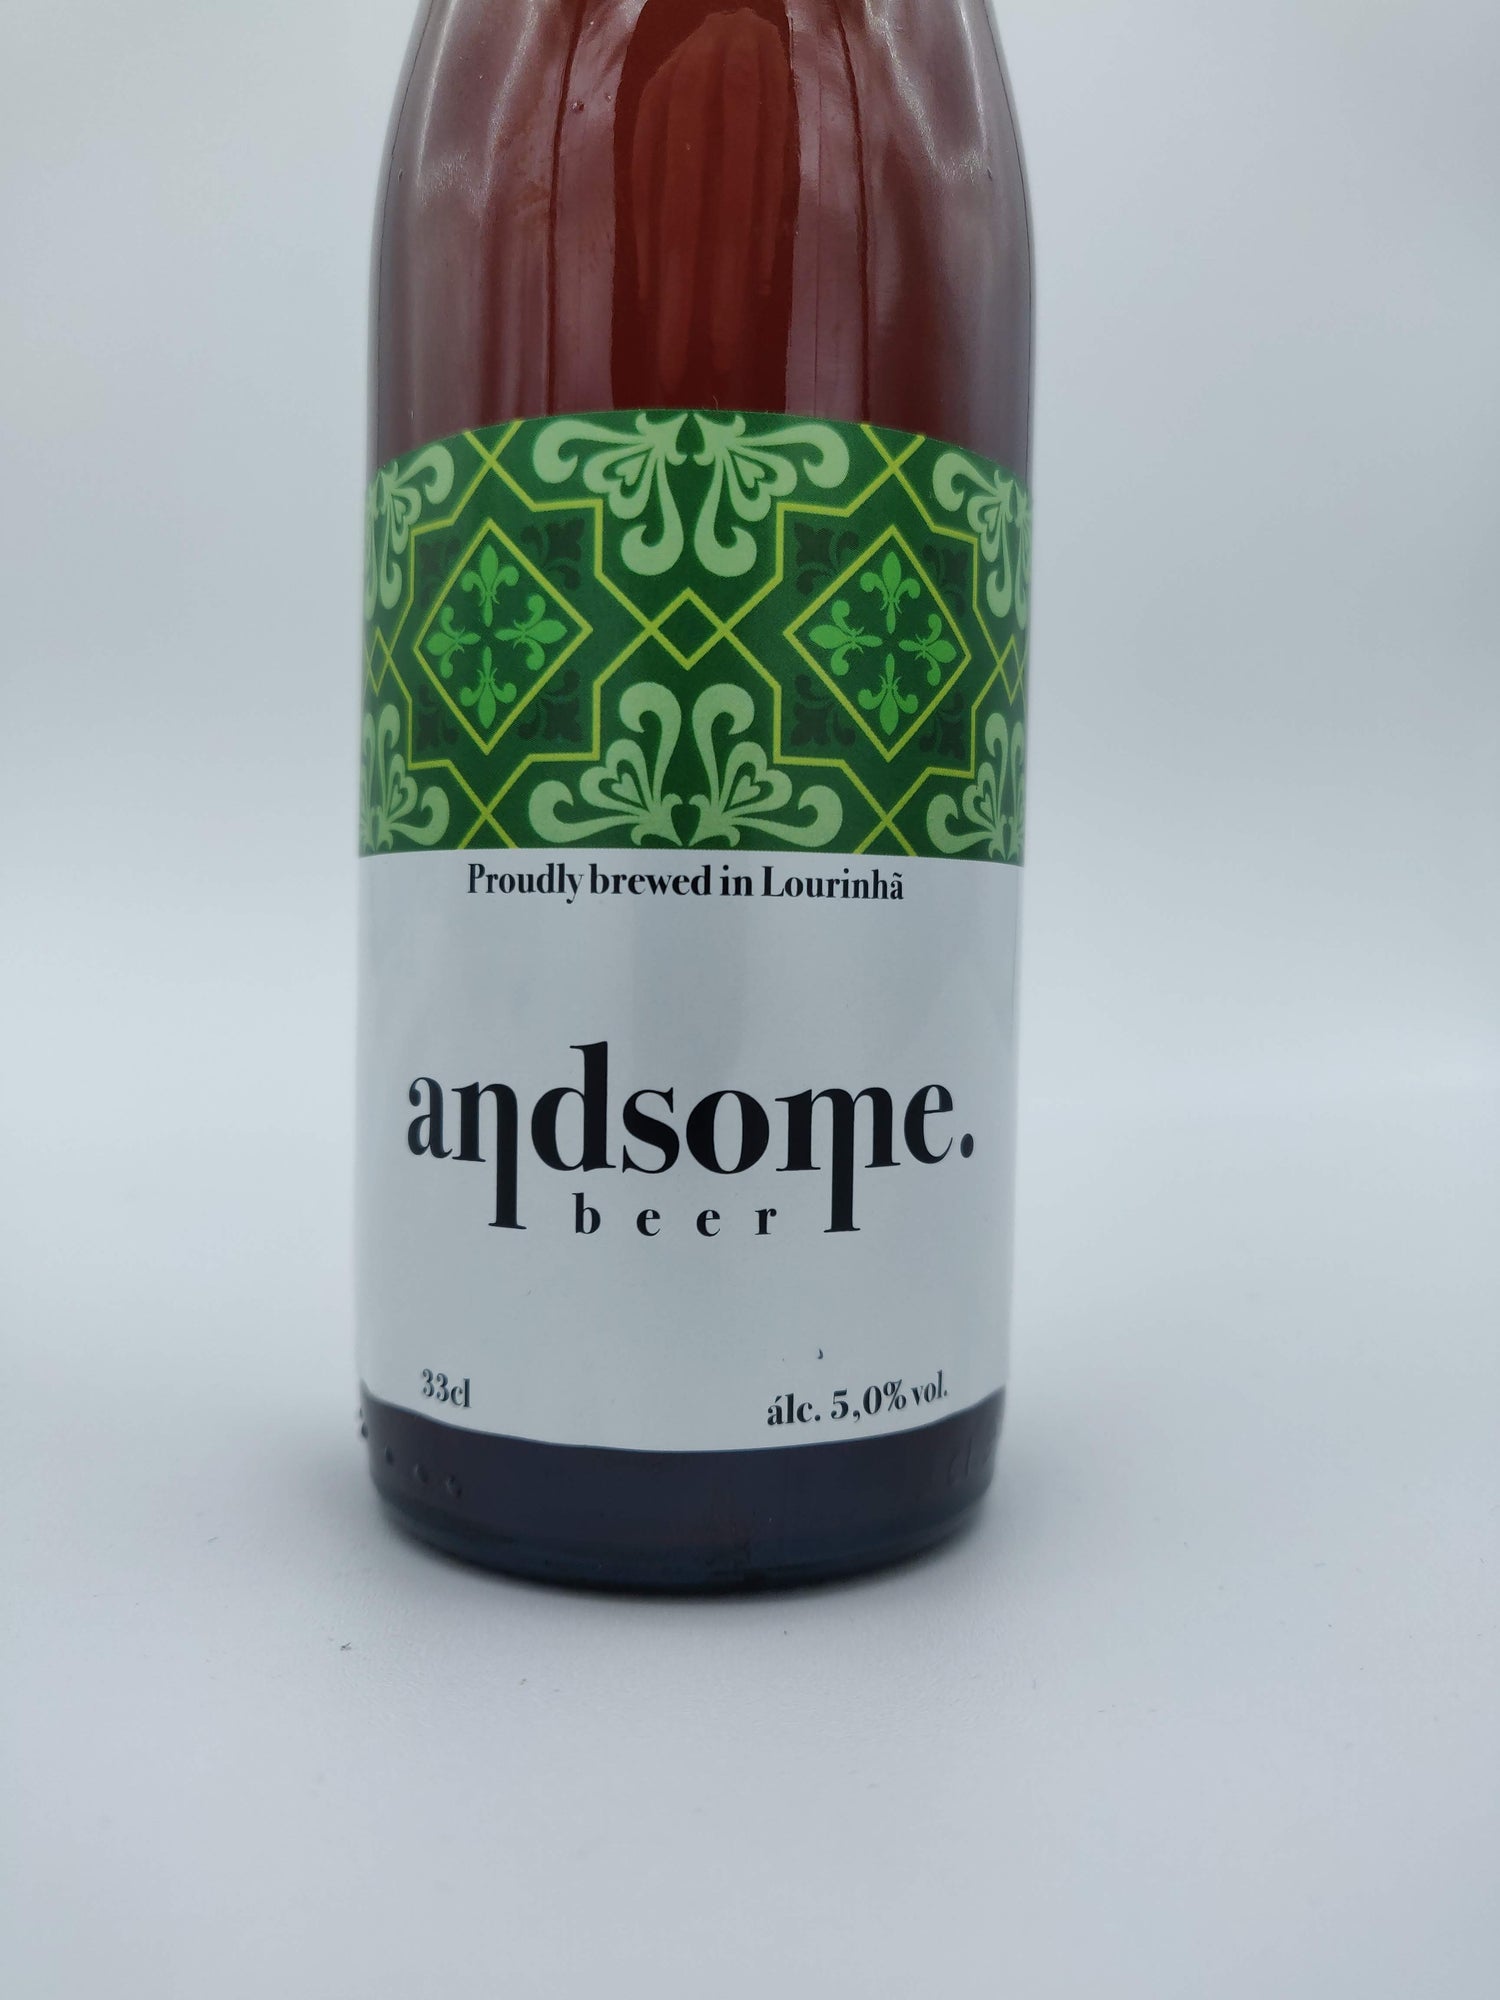 andsome beer no 02 is 5.0%